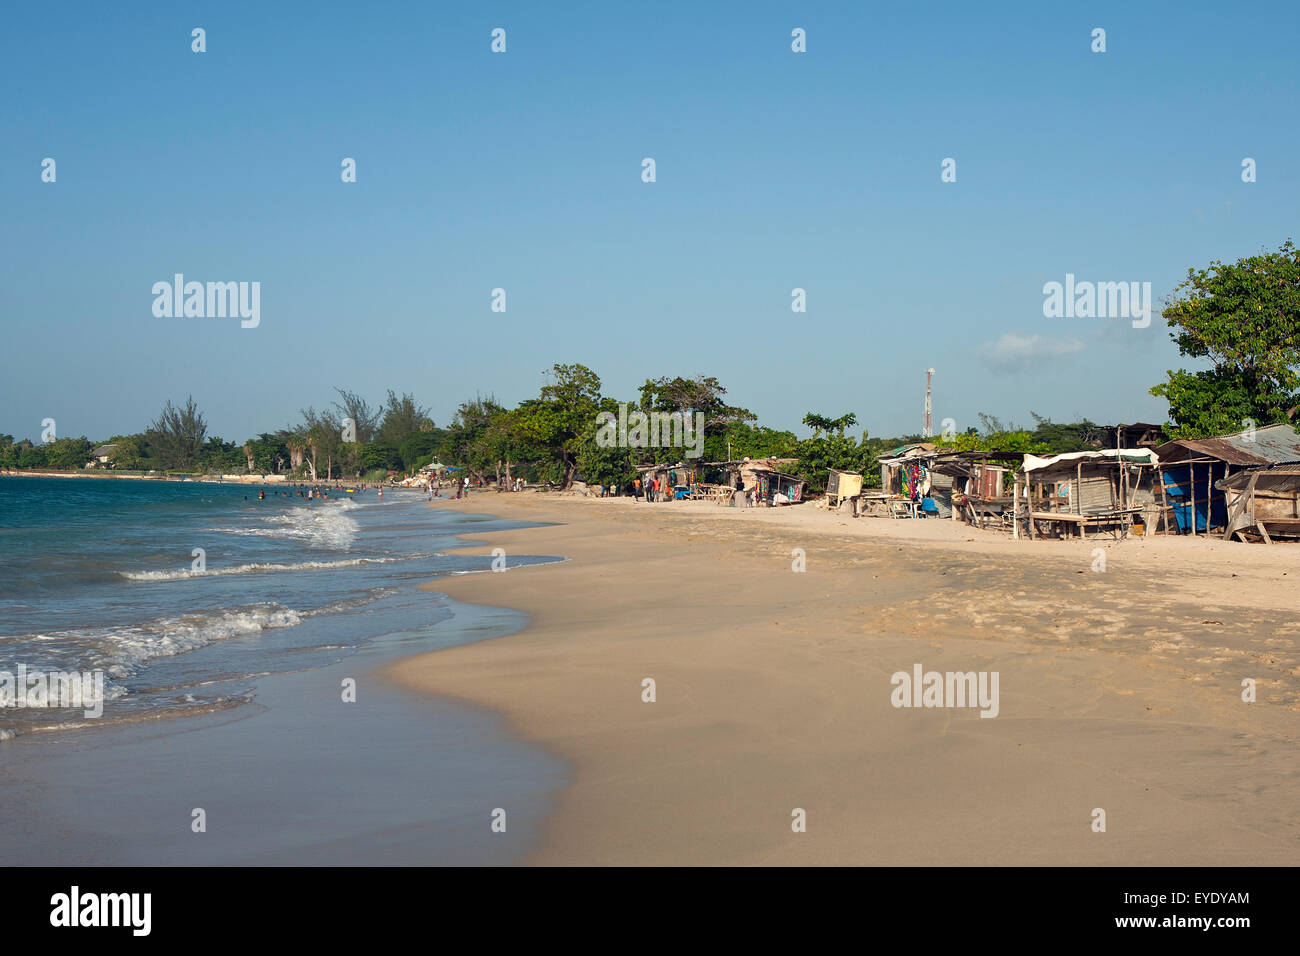 Venden en una playa, Runaway Bay, Saint Ann, Jamaica Foto de stock